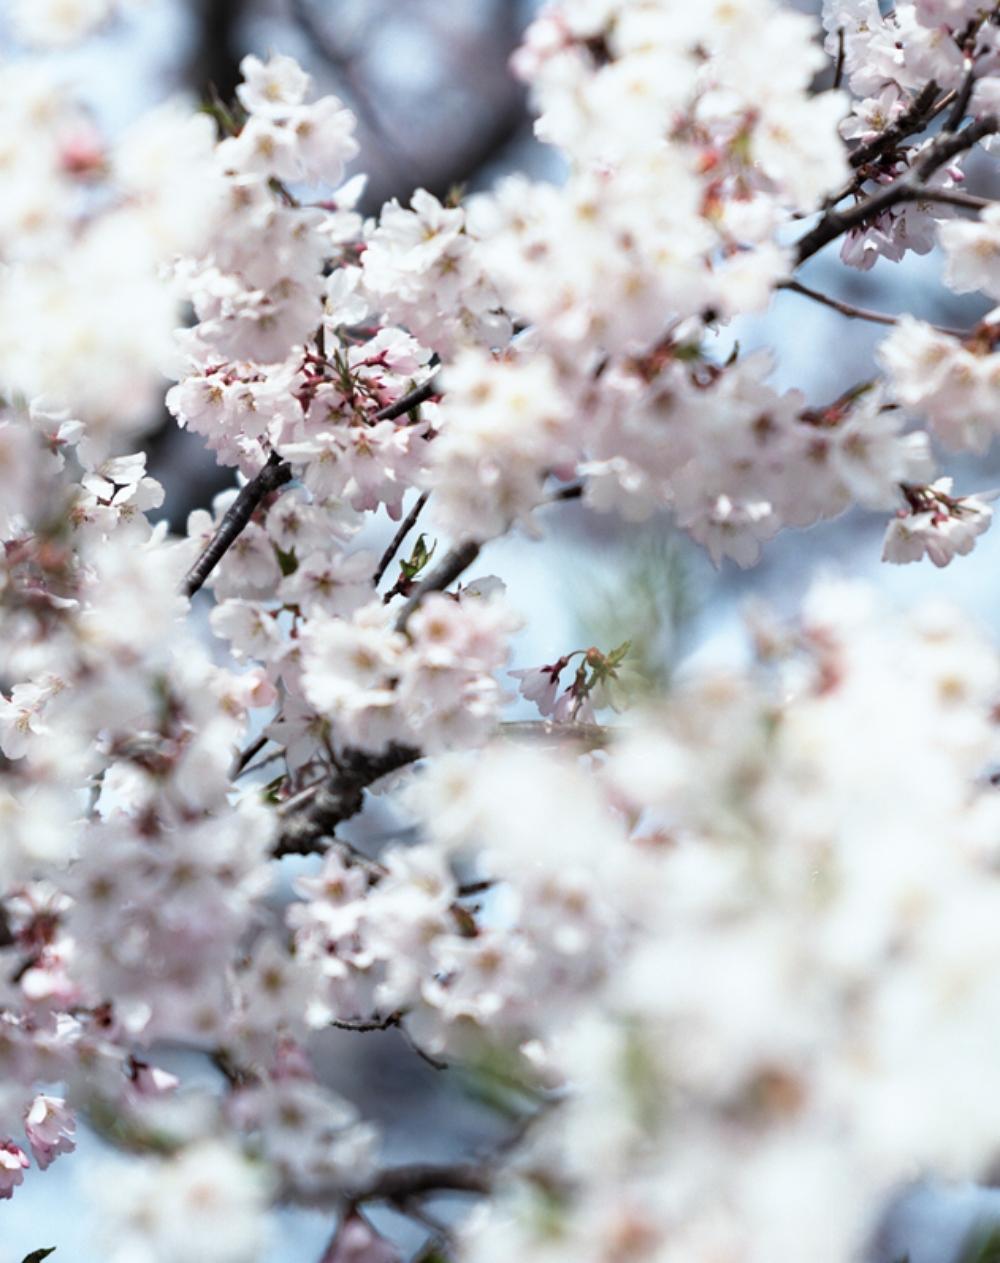 RISAKU SUZUKI (*1963, Japan)
SAKURA 15,4-46
2015
Chromogenic print
Sheet 75 x 60 cm (29 1/2 x 23 5/8 in.)
Edition of 5; Ed. no. 4/10
Framed

The Sakura (Japanese term for ‘cherry blossoms’) Celebration commences in early spring and has inspired